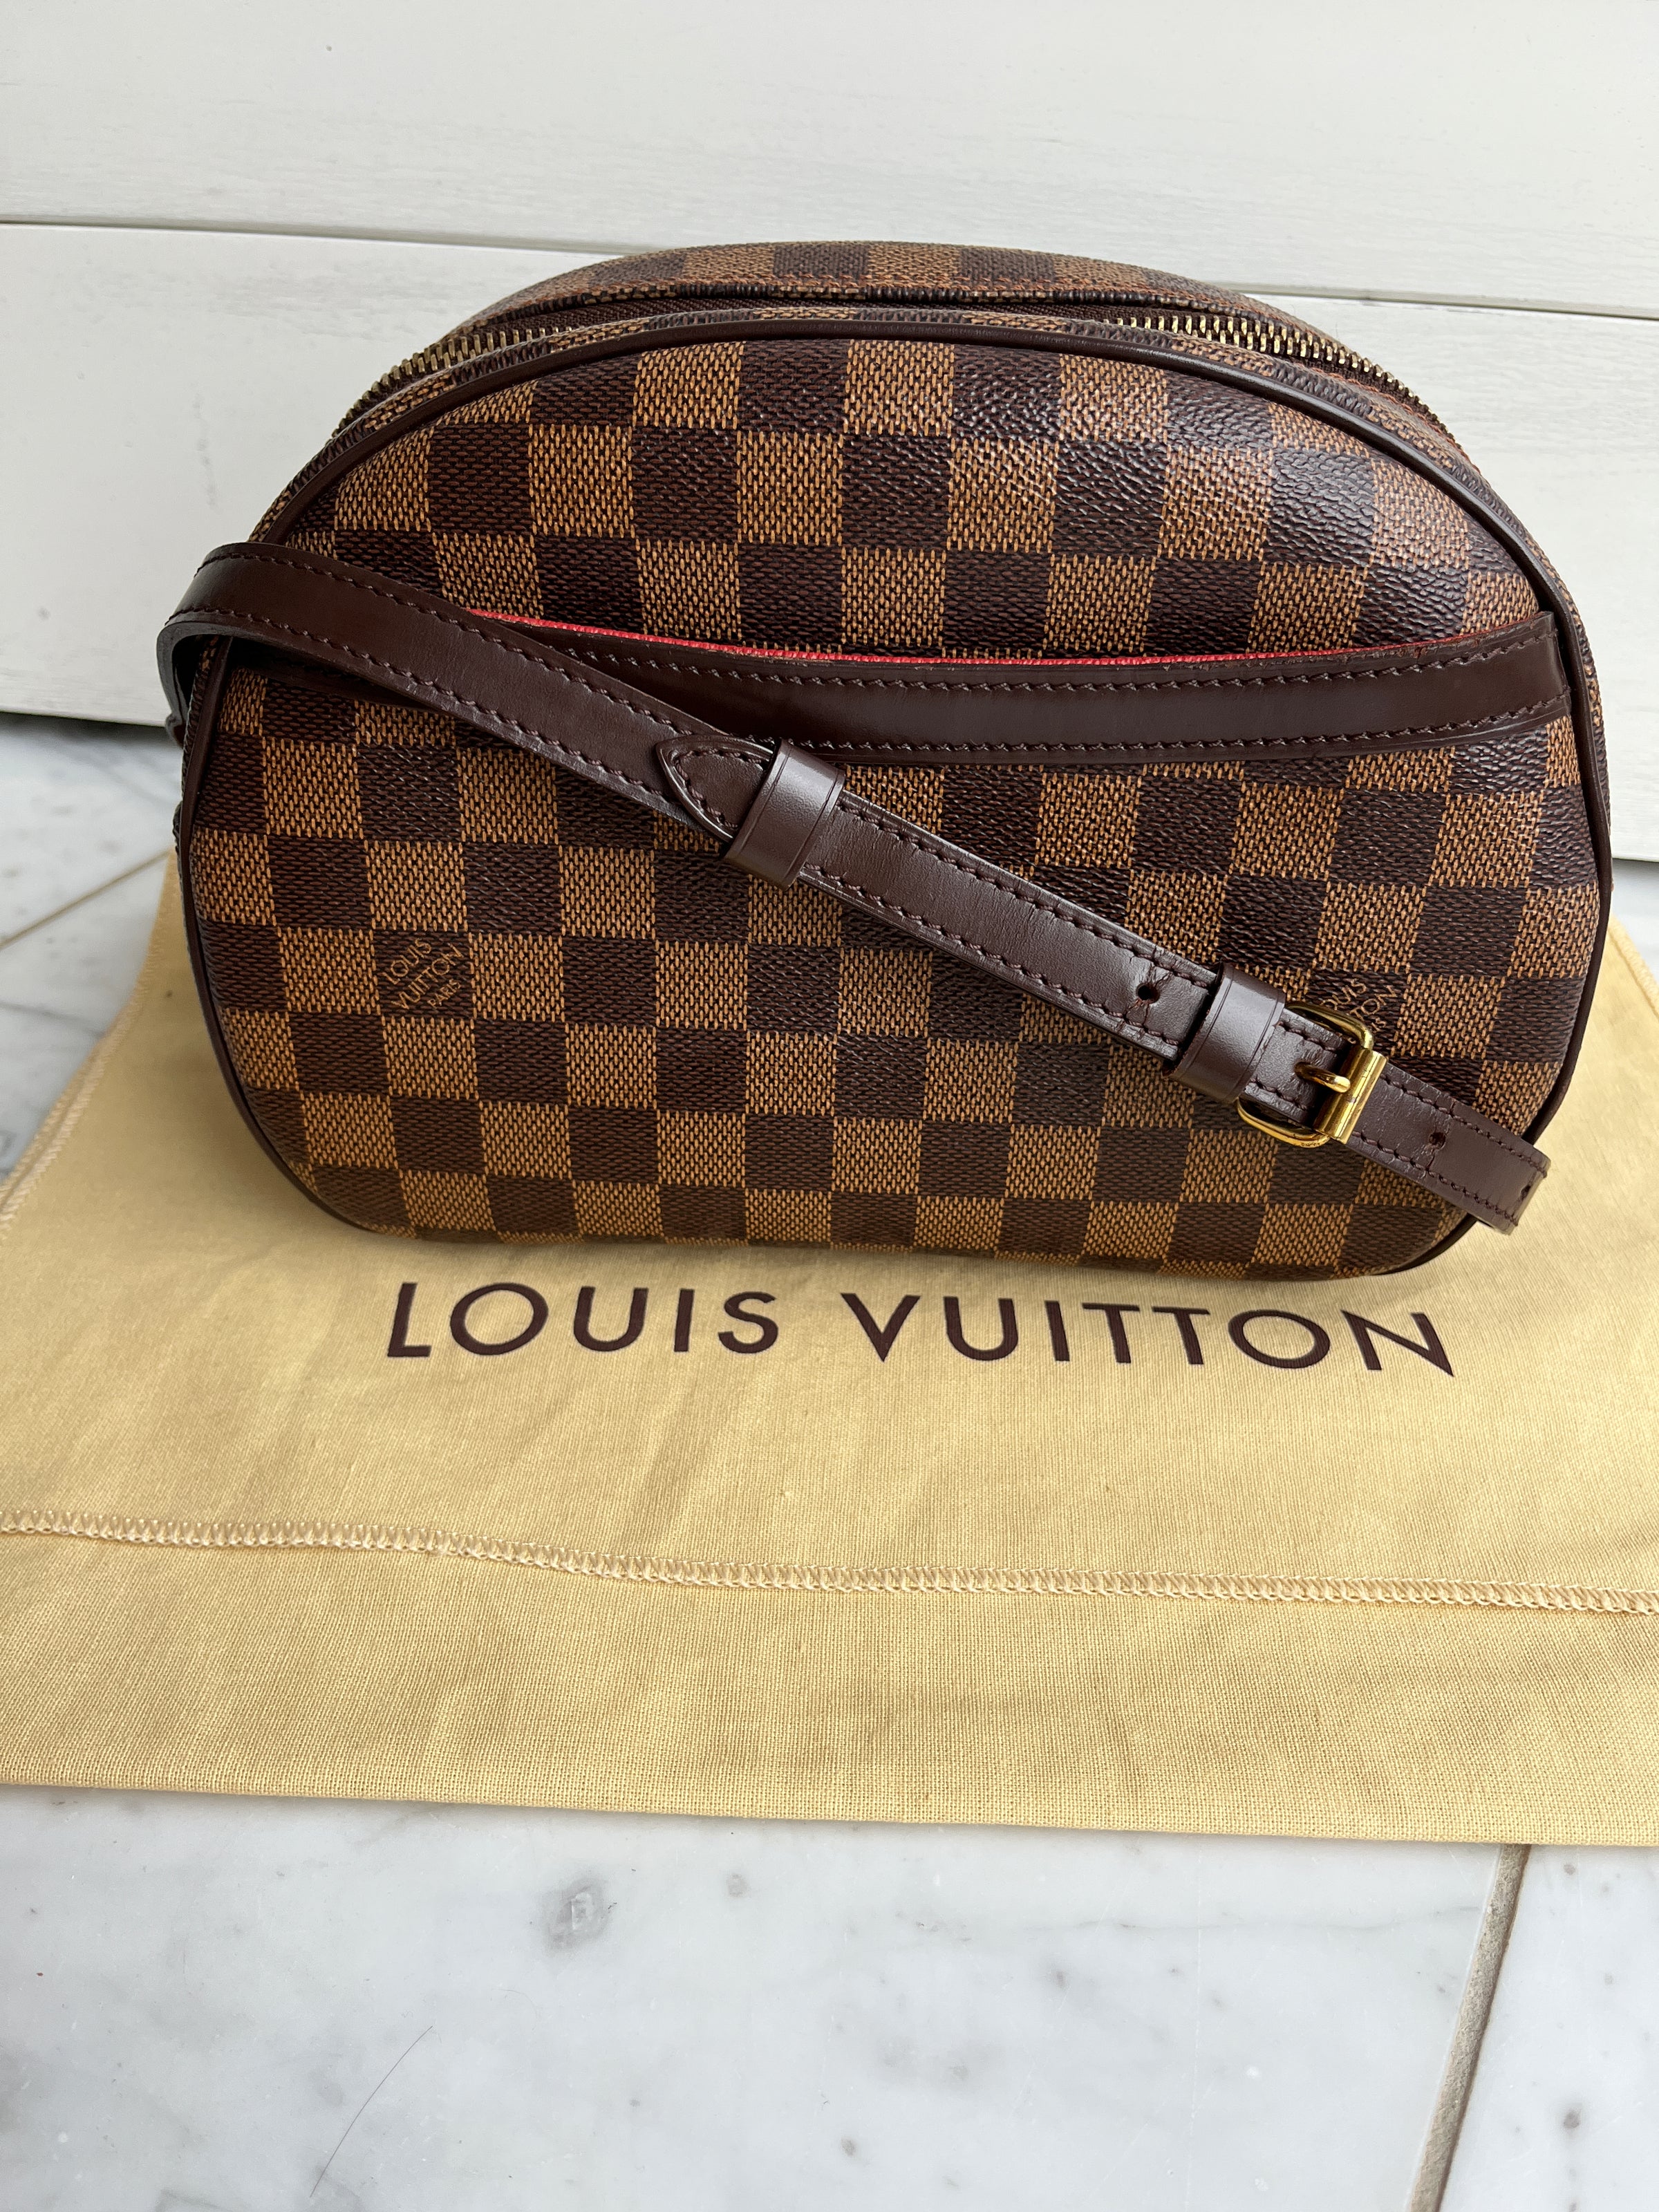 De'lux Bagz - LV blois crossbody bag, preloved in good condition, comes  with dust bag, price RM 2200 nett #deluxpreloved#deluxlv